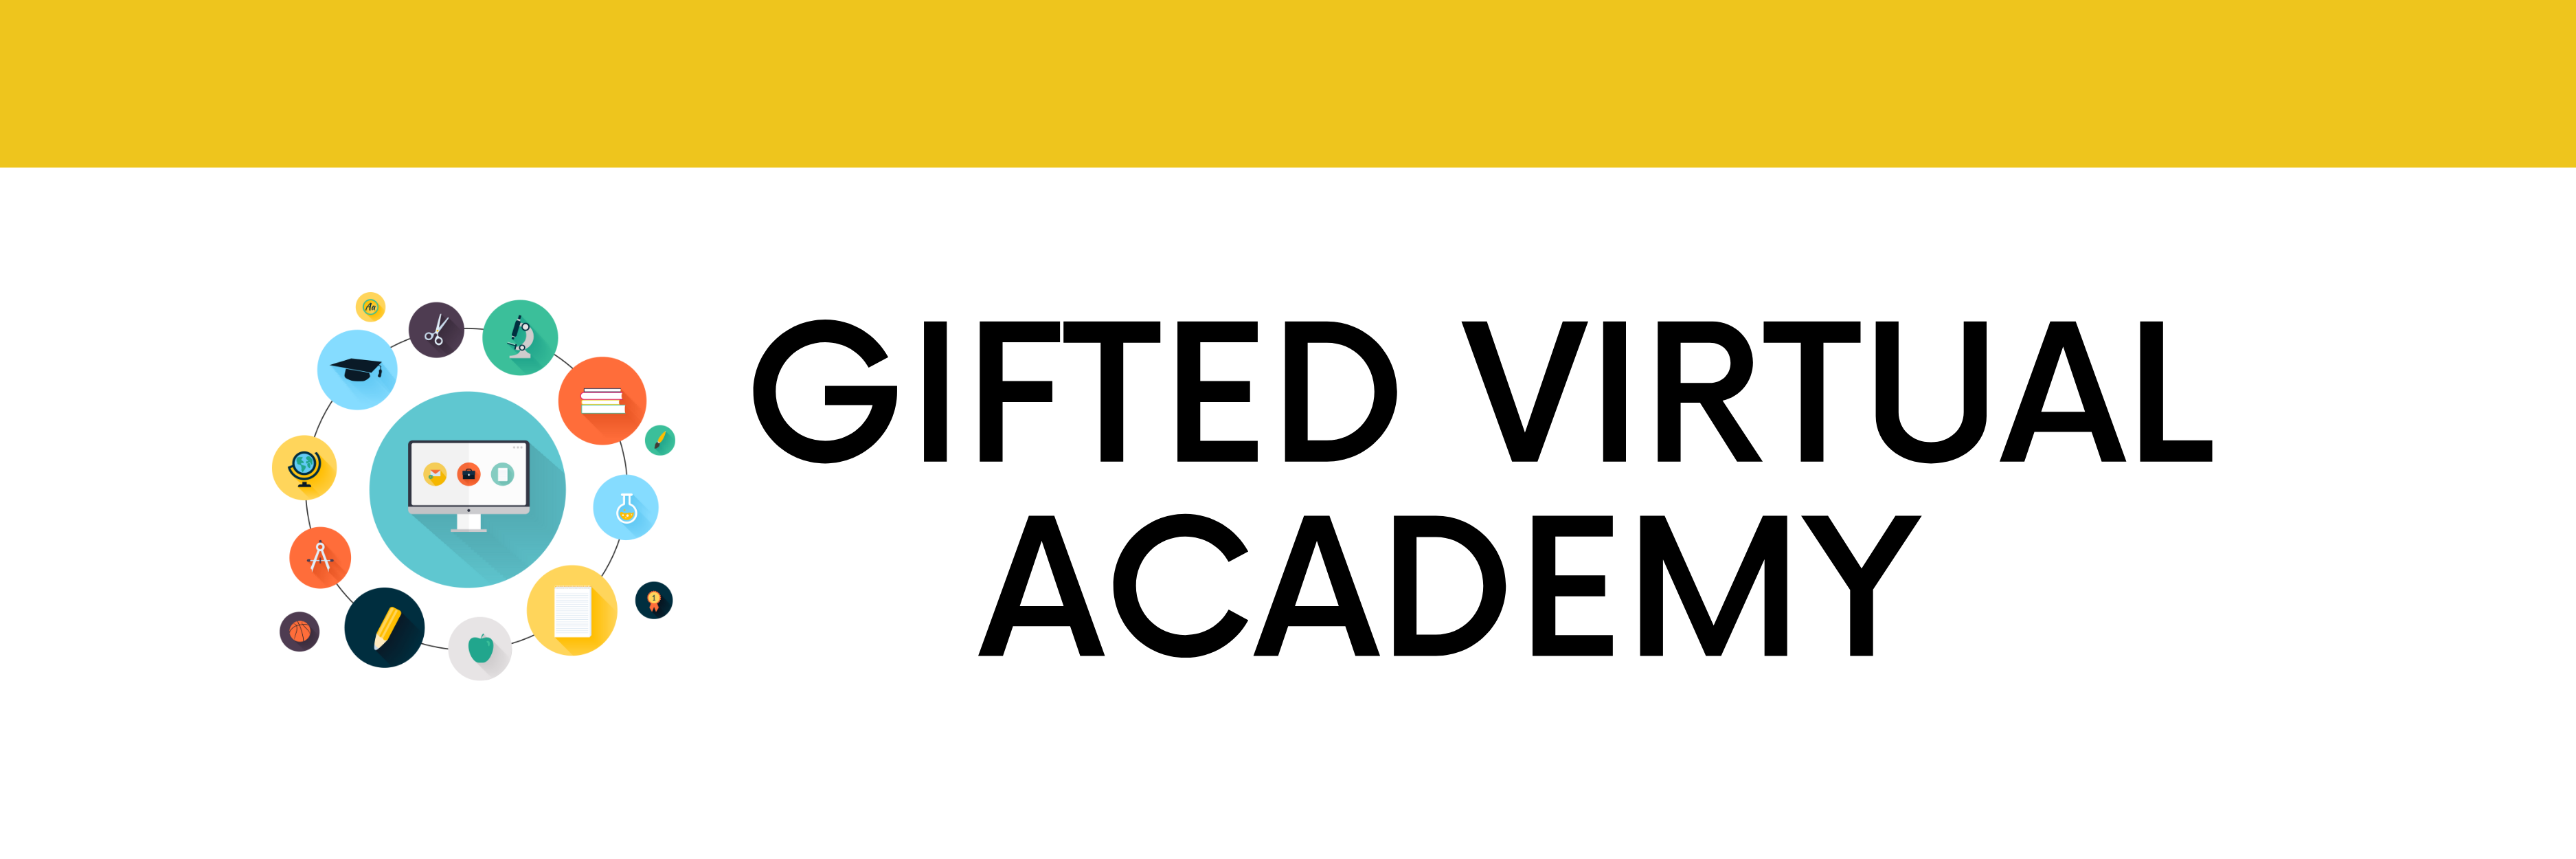 gifted virtual academy course header